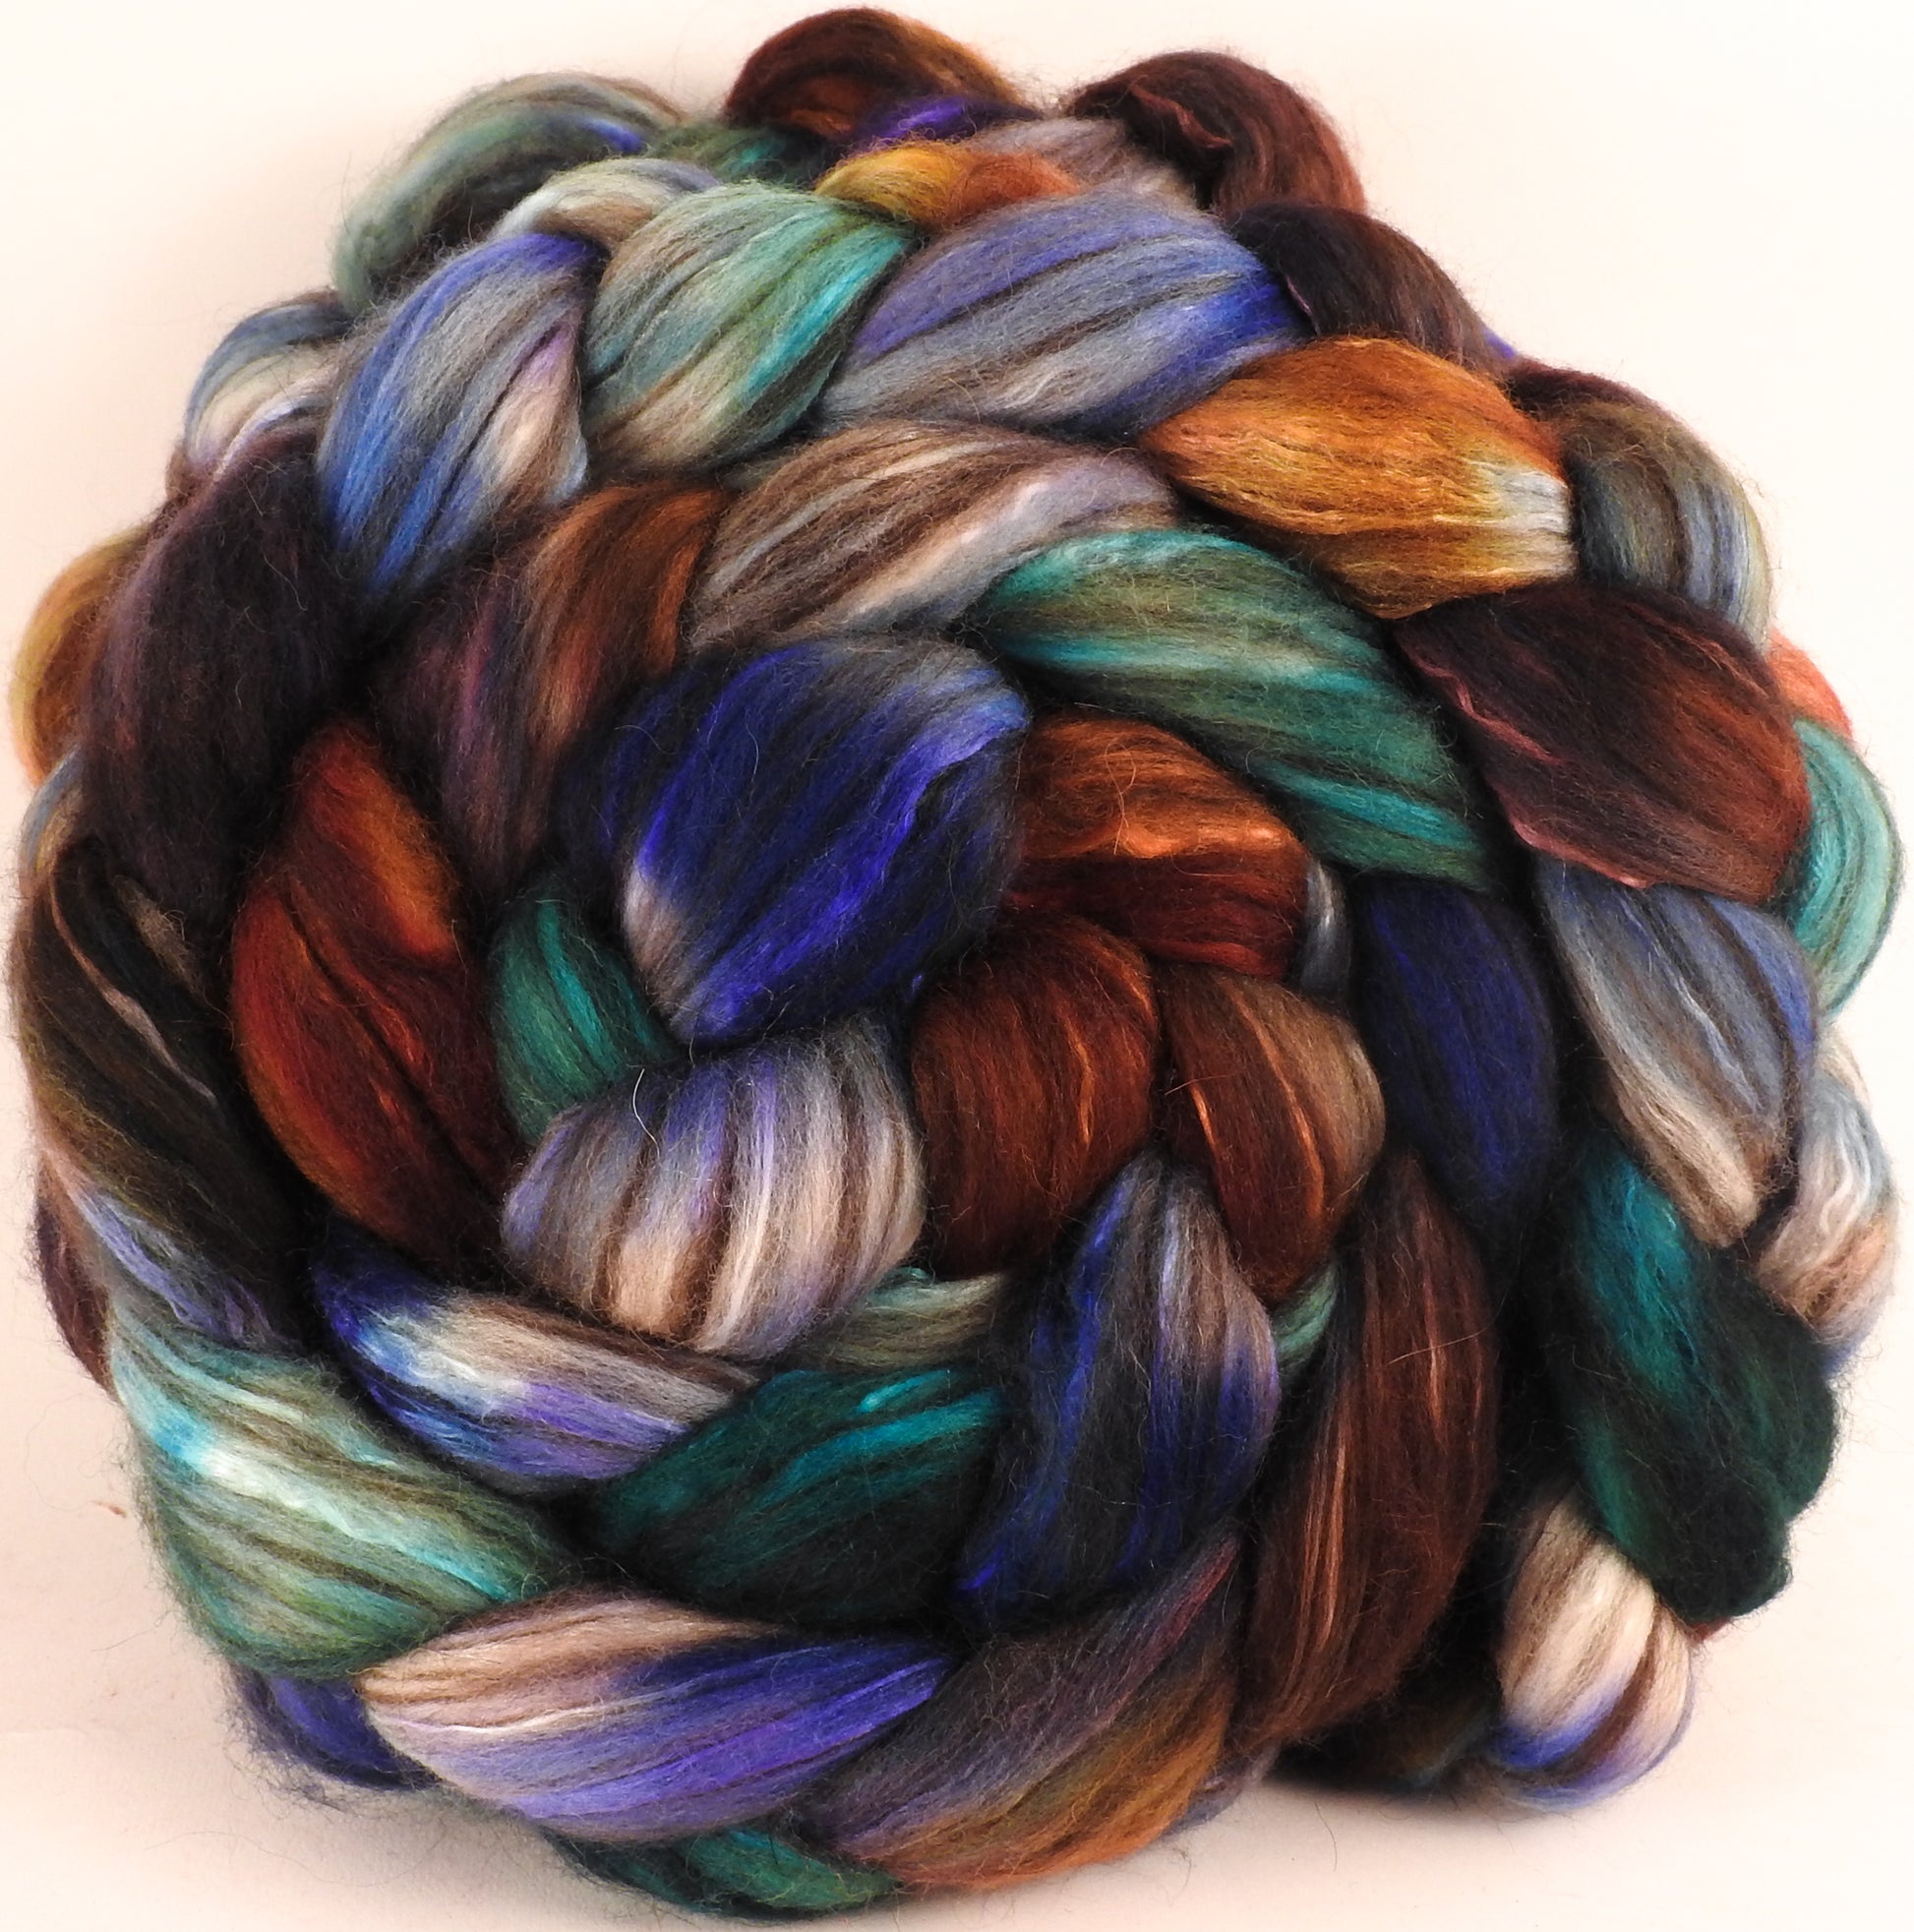 Hand dyed top for spinning - Argyle Socks (5.3 oz) - 18.5 mic merino/ camel/ brown alpaca/ mulberry silk/ (40/20/20/20) - Inglenook Fibers